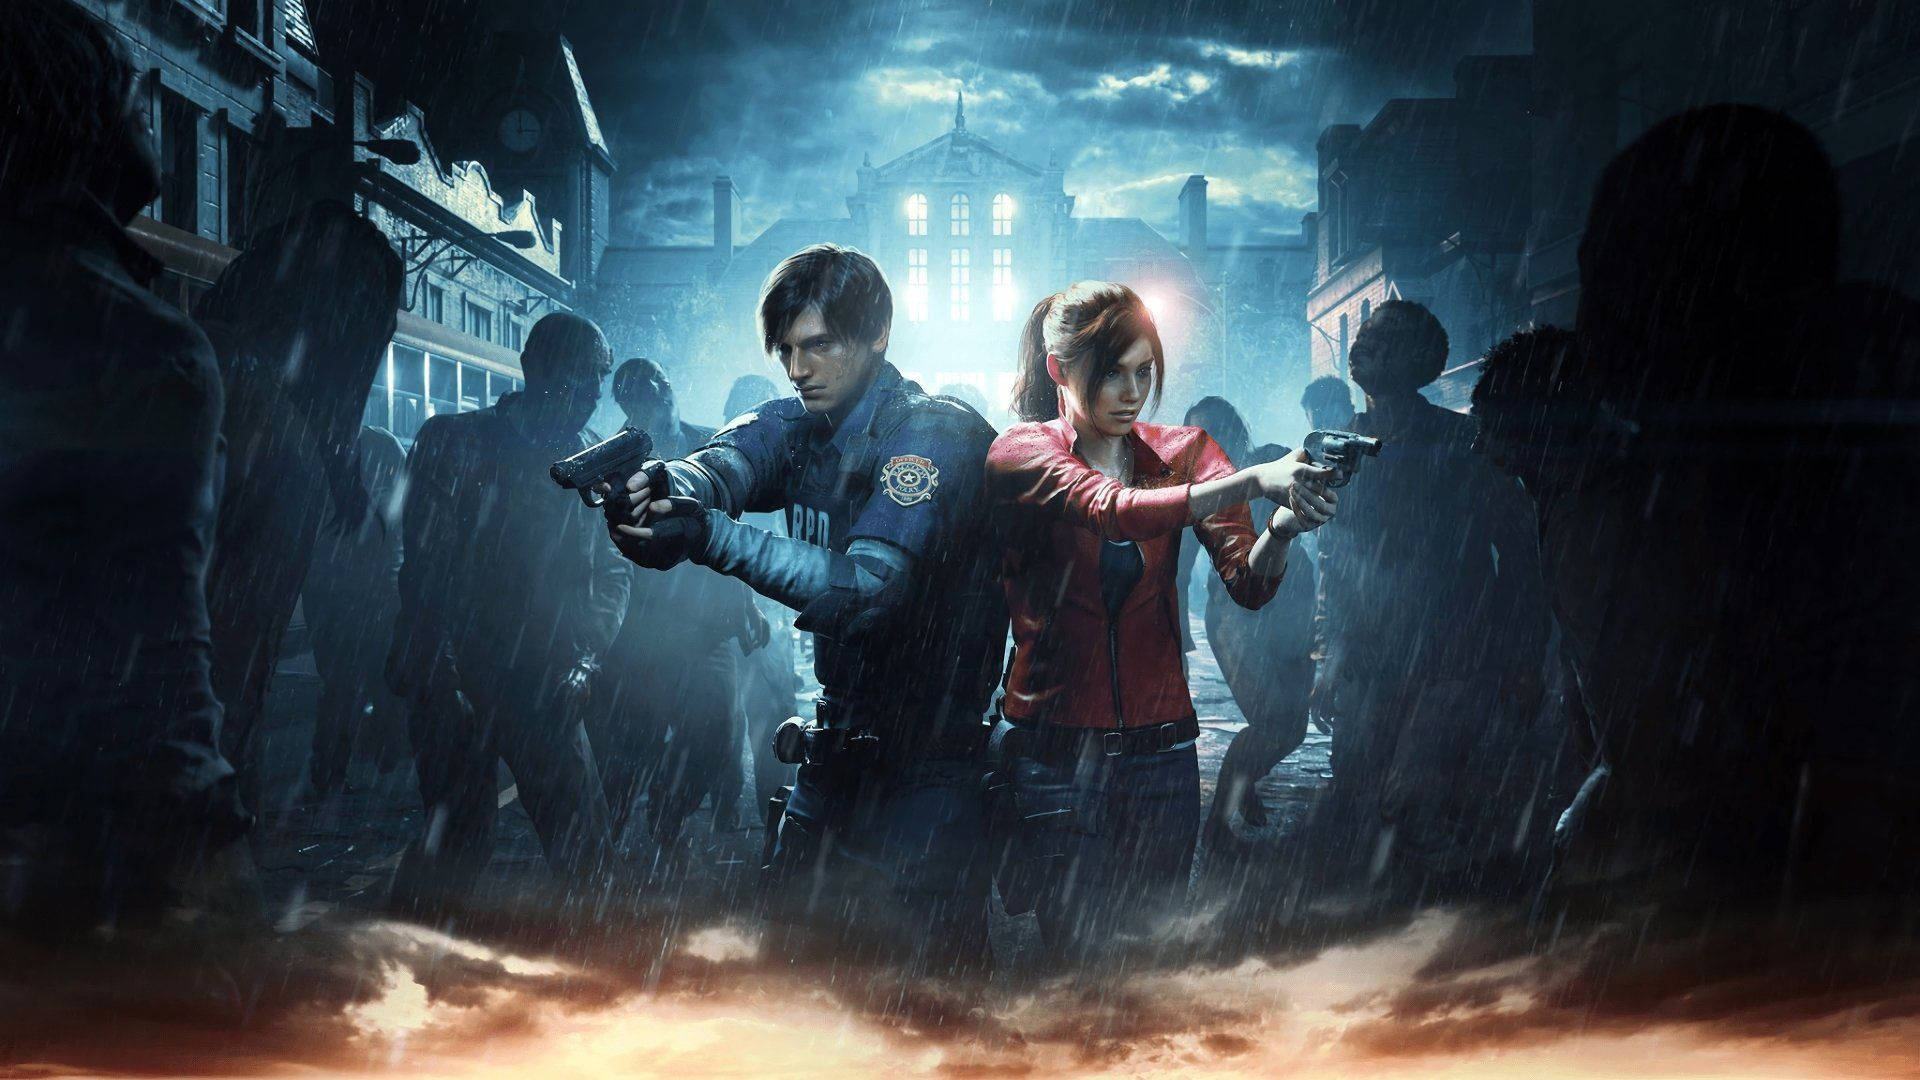 Top 999+ Resident Evil 2 Wallpaper Full HD, 4K✅Free to Use